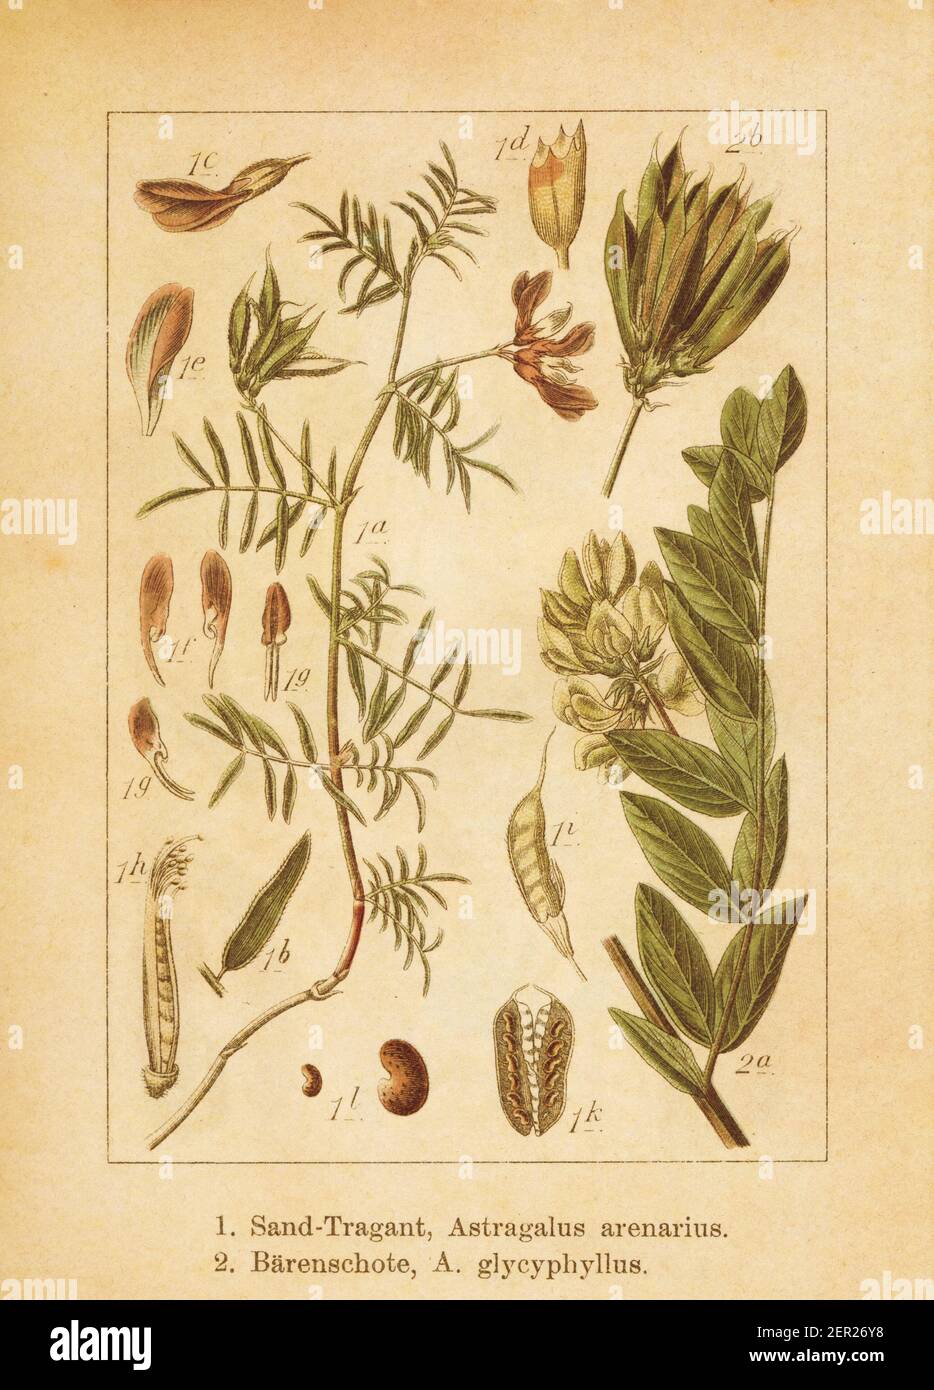 Antique illustration of an astragalus arenarius and astragalus glycyphyllos (also known as liquorice milkvetch, wild liquorice, wild licorice). Engrav Stock Photo